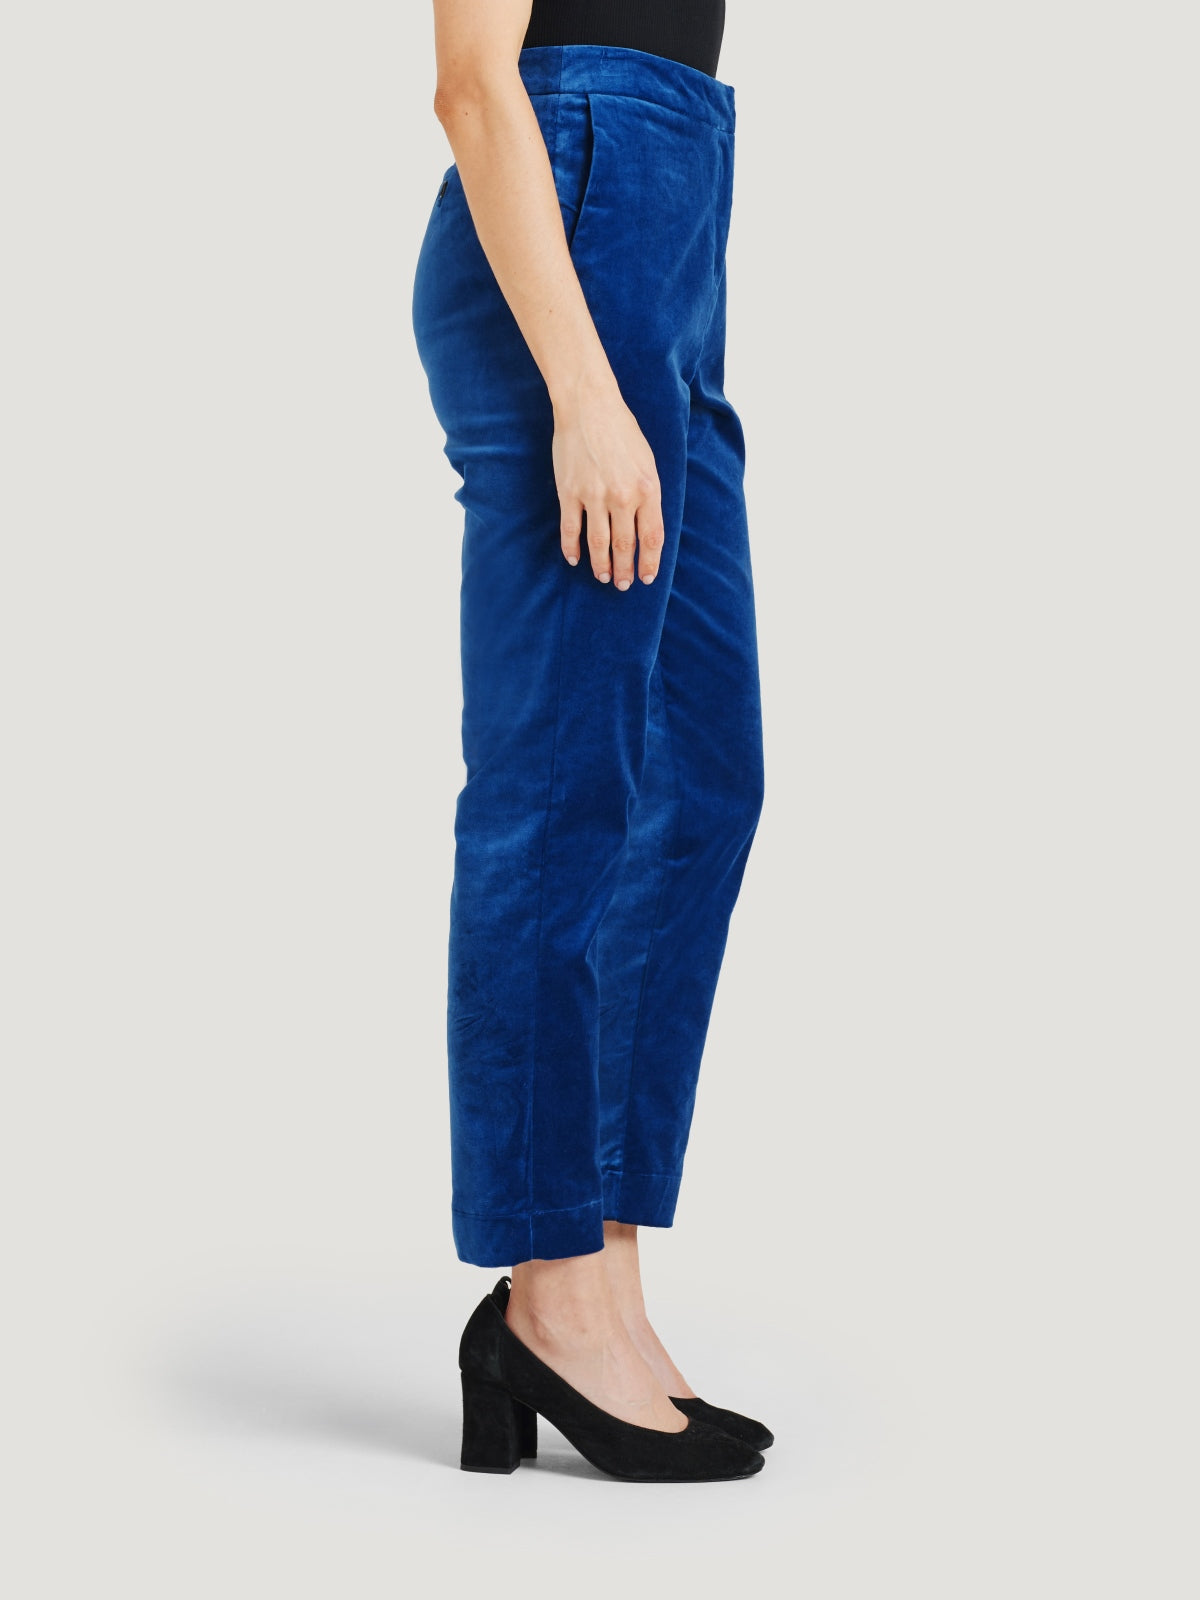 Victoria Beckham ALINA TROUSER - Trousers - sapphire blue/dark blue -  Zalando.co.uk